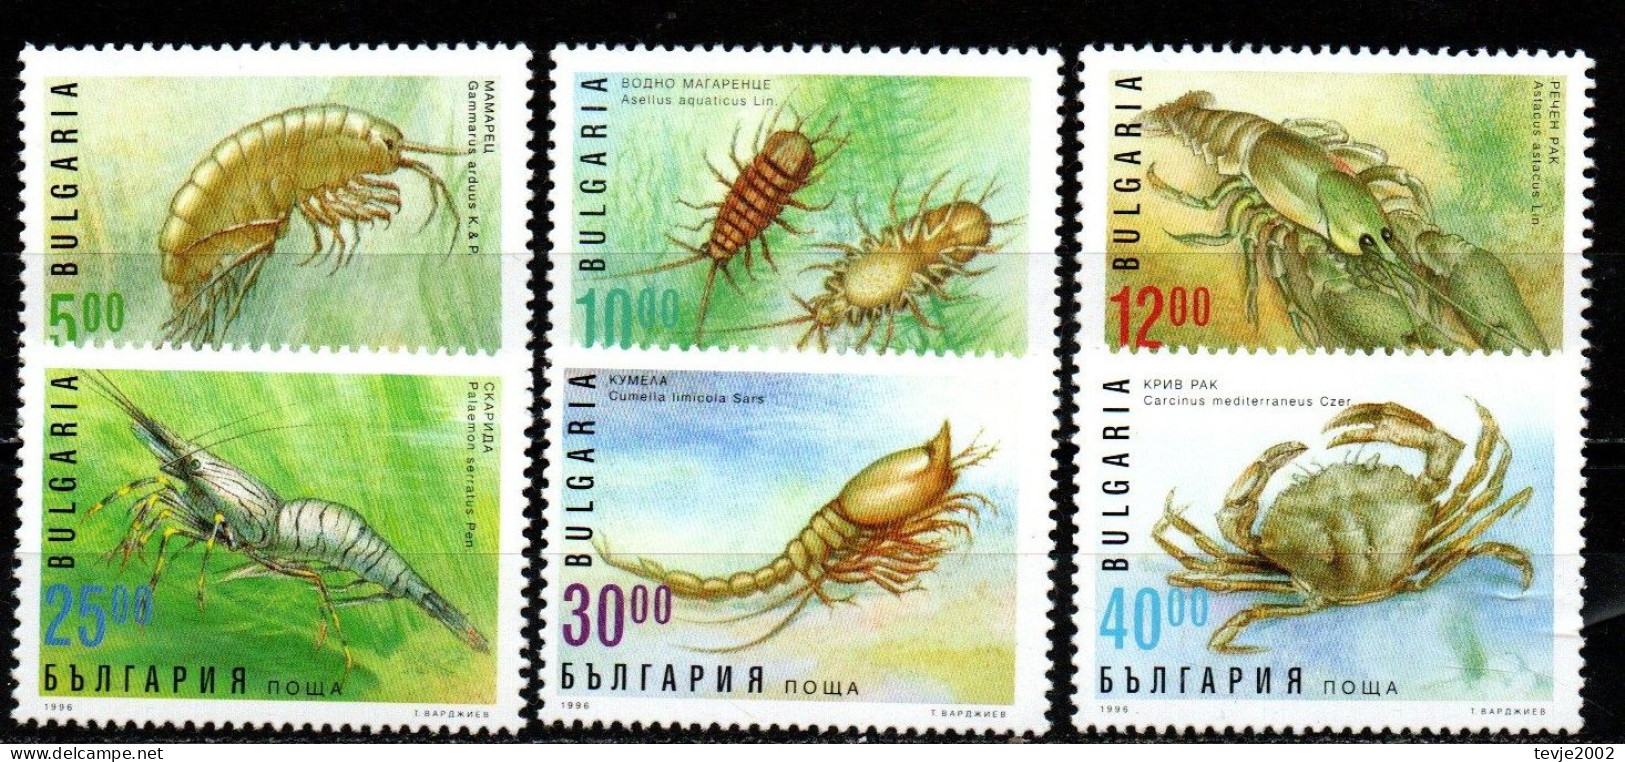 Bulgarien 1996 - Mi.Nr. 4238 - 4243 - Postfrisch MNH - Tiere Animals Krabben Crabs - Crustacés